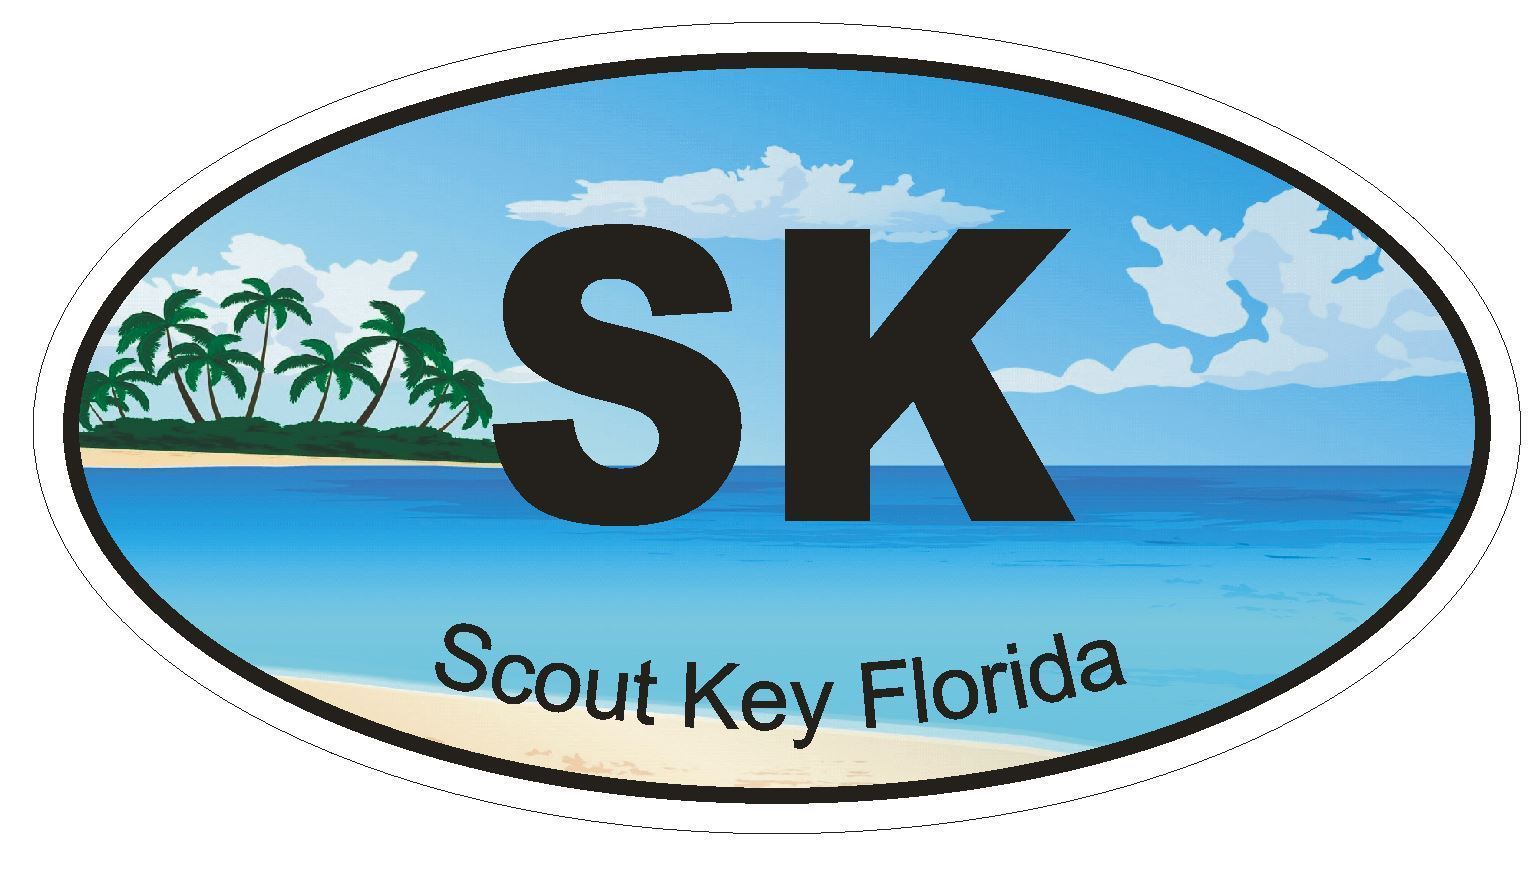 Scout Key Florida Oval Bumper Sticker or Helmet Sticker D1279 Euro Oval - $1.39 - $75.00